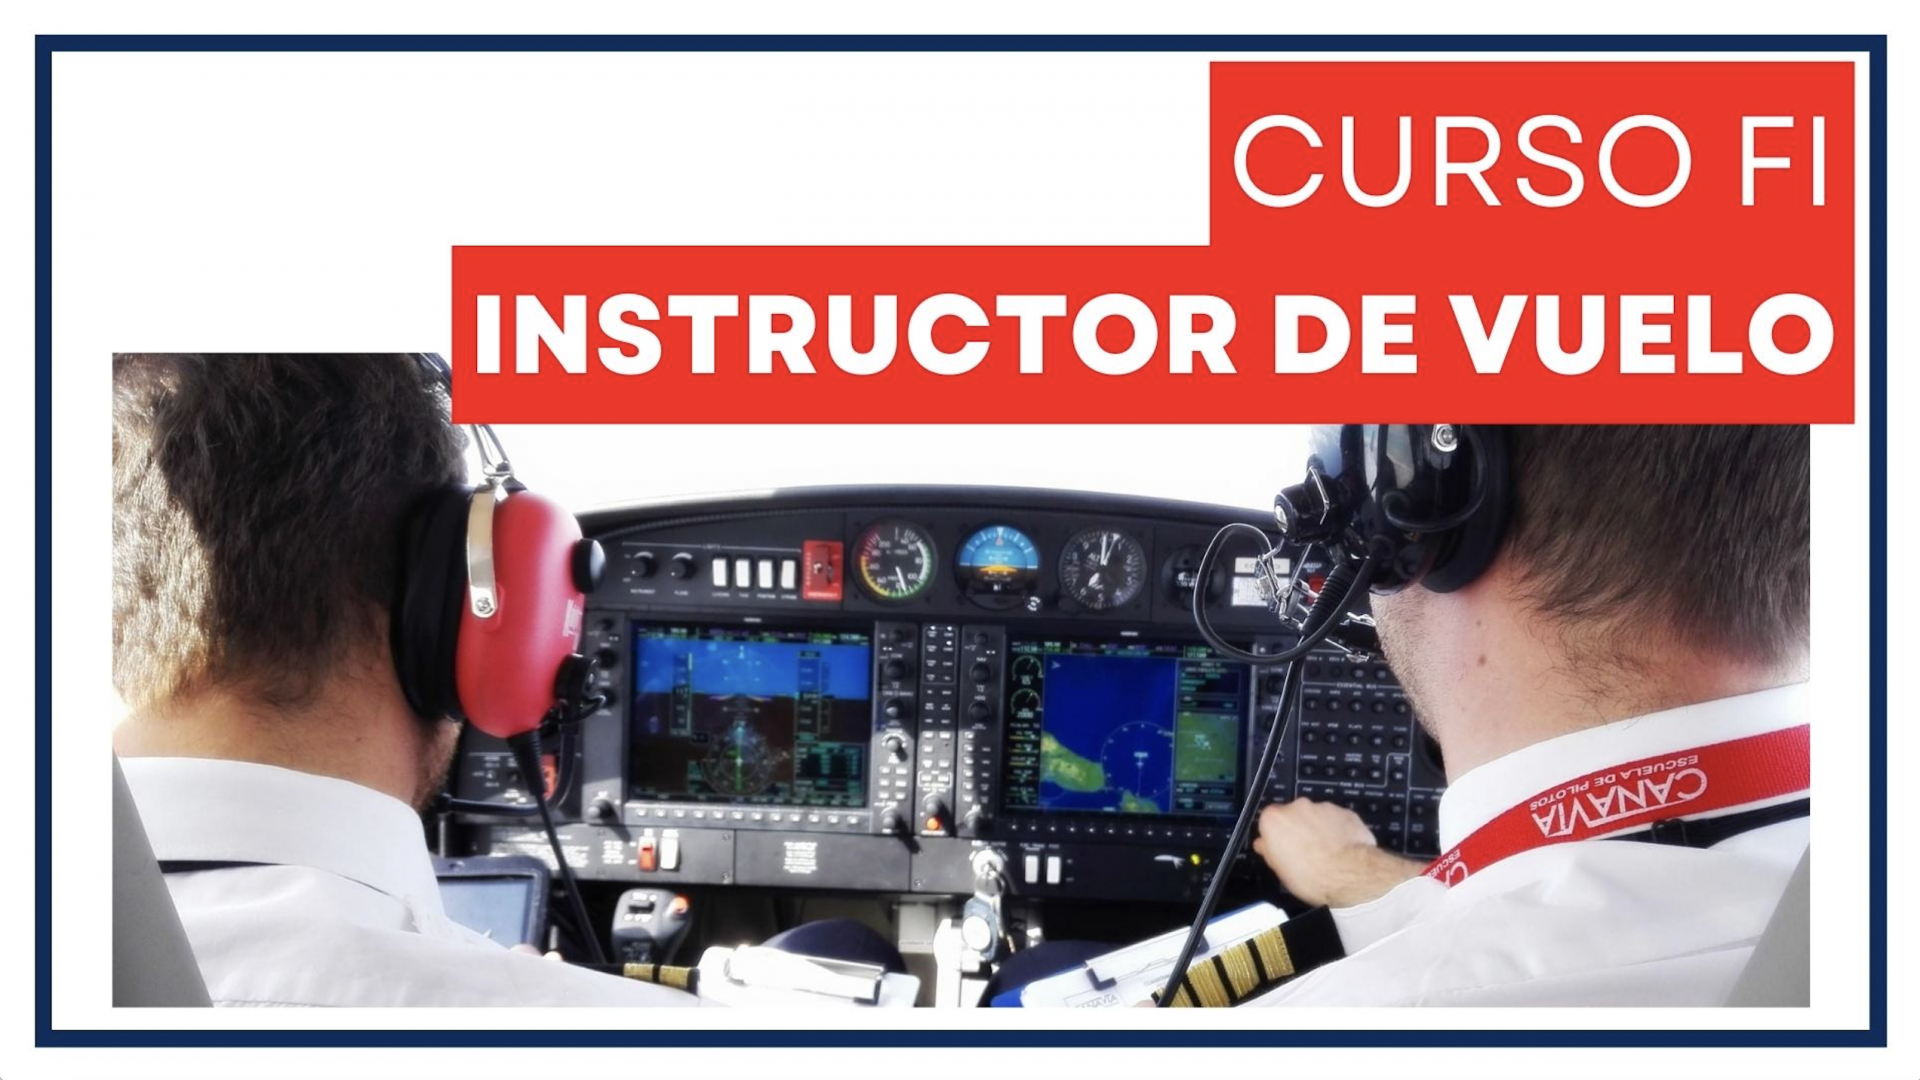 Nuevo curso FI - instructor de vuelo Agosto 2022  / New FI - flight instructor course August 2022.